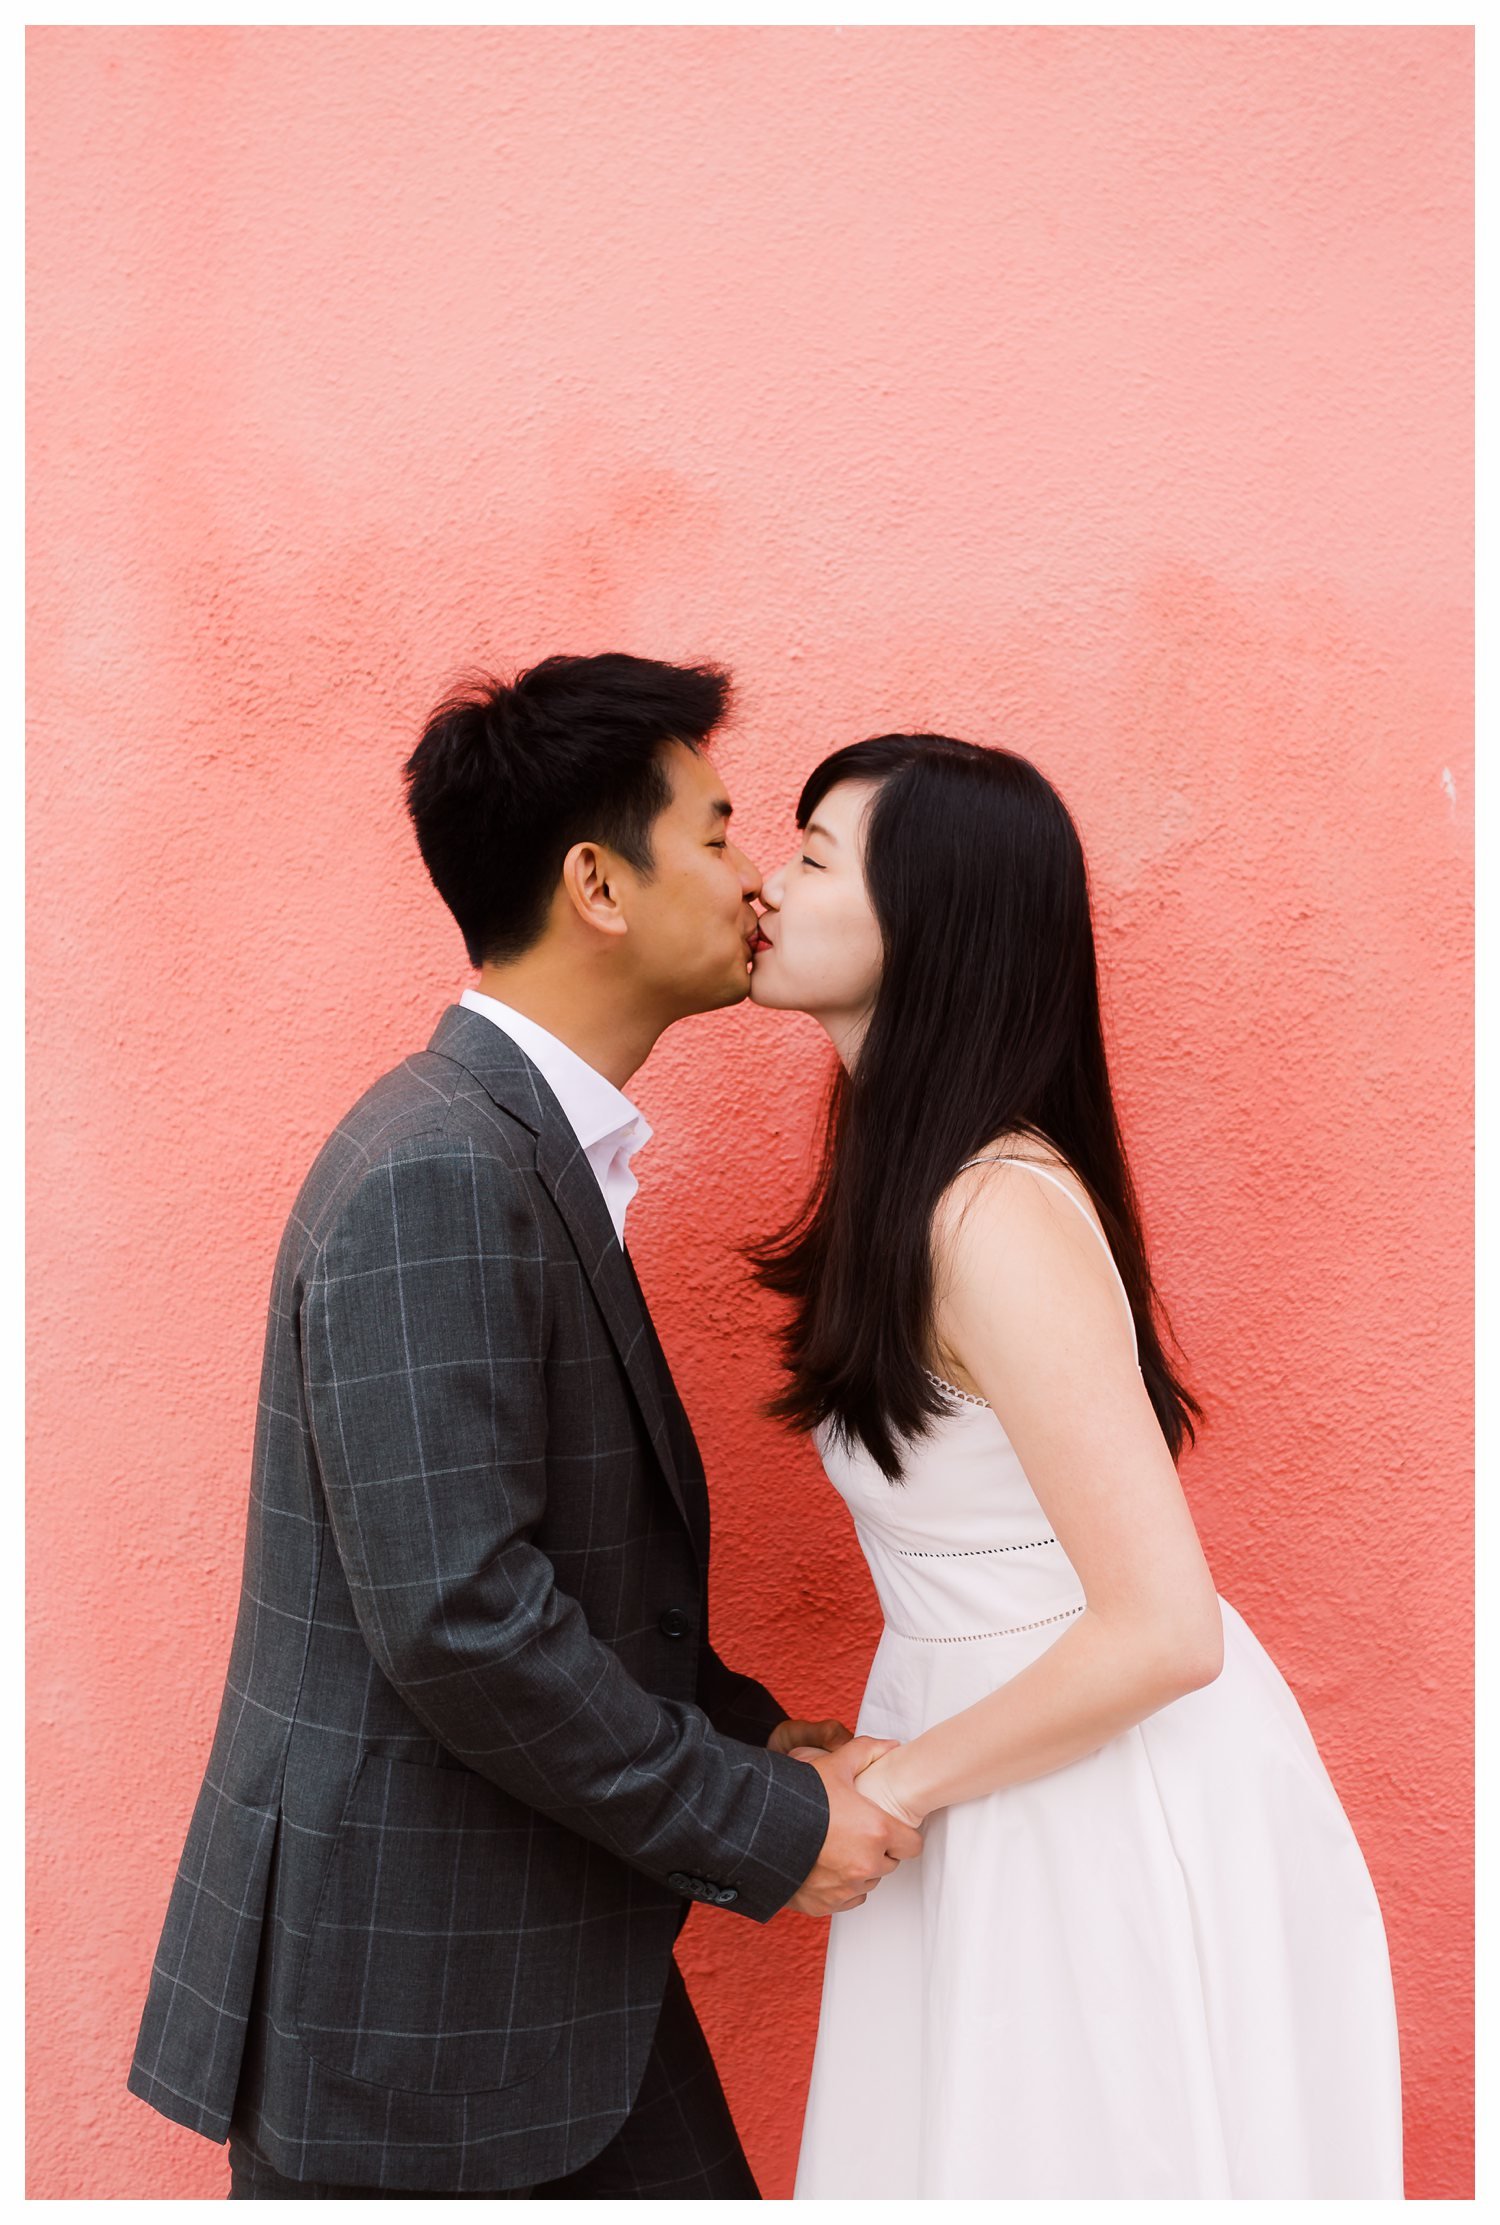 torcello-burano-photographer-couple-proposal.jpg